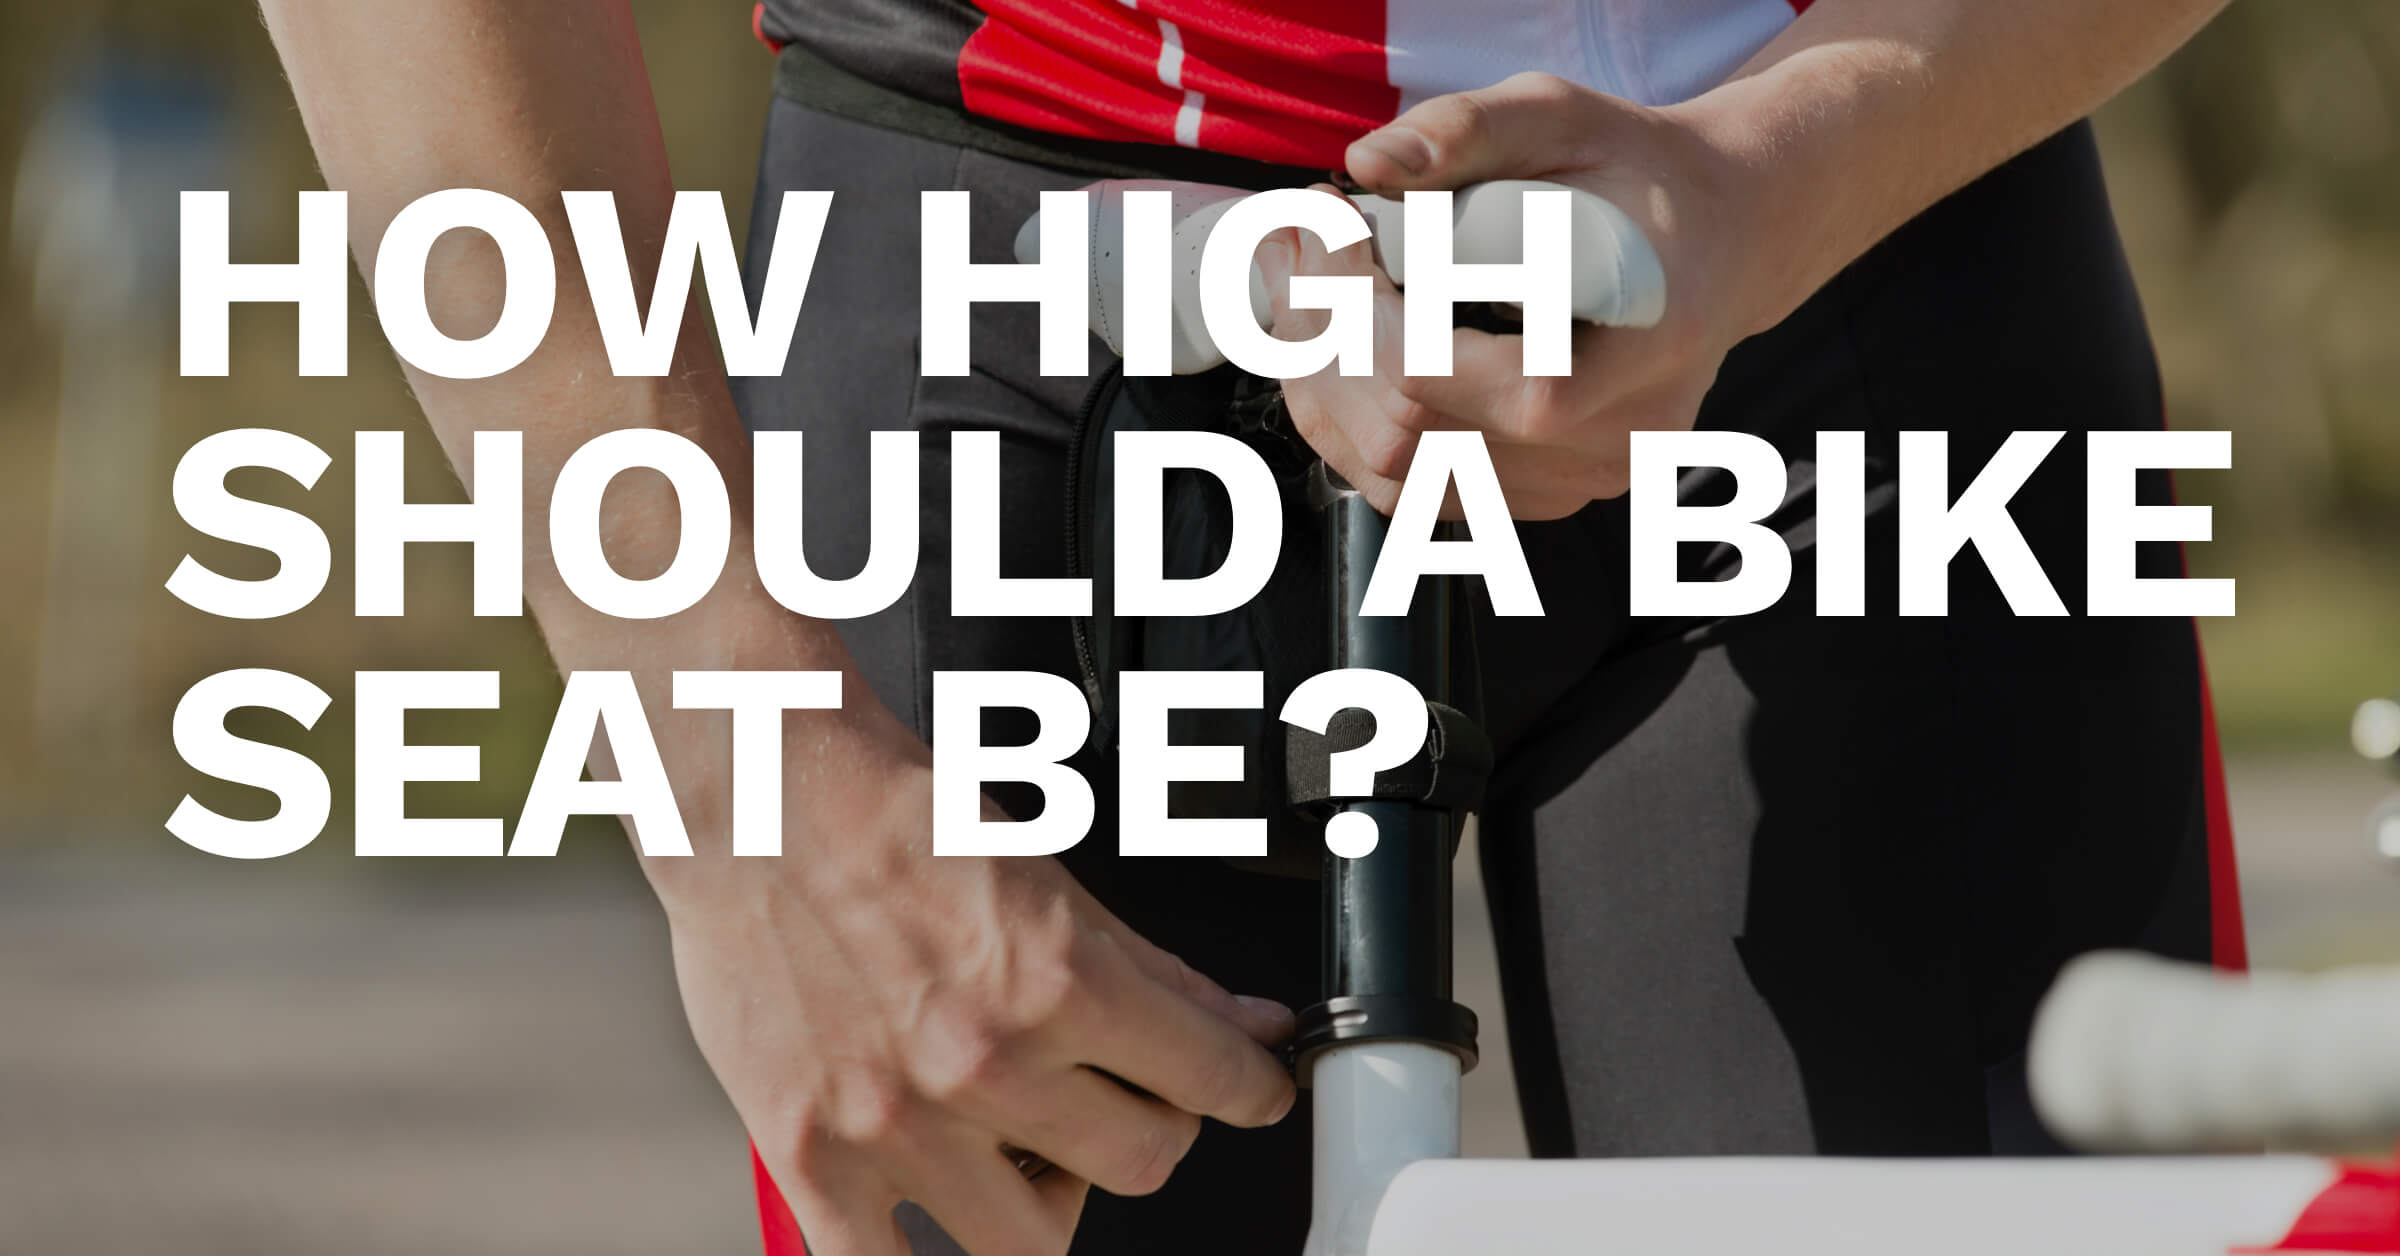 ​How High Should a Bike Seat be?